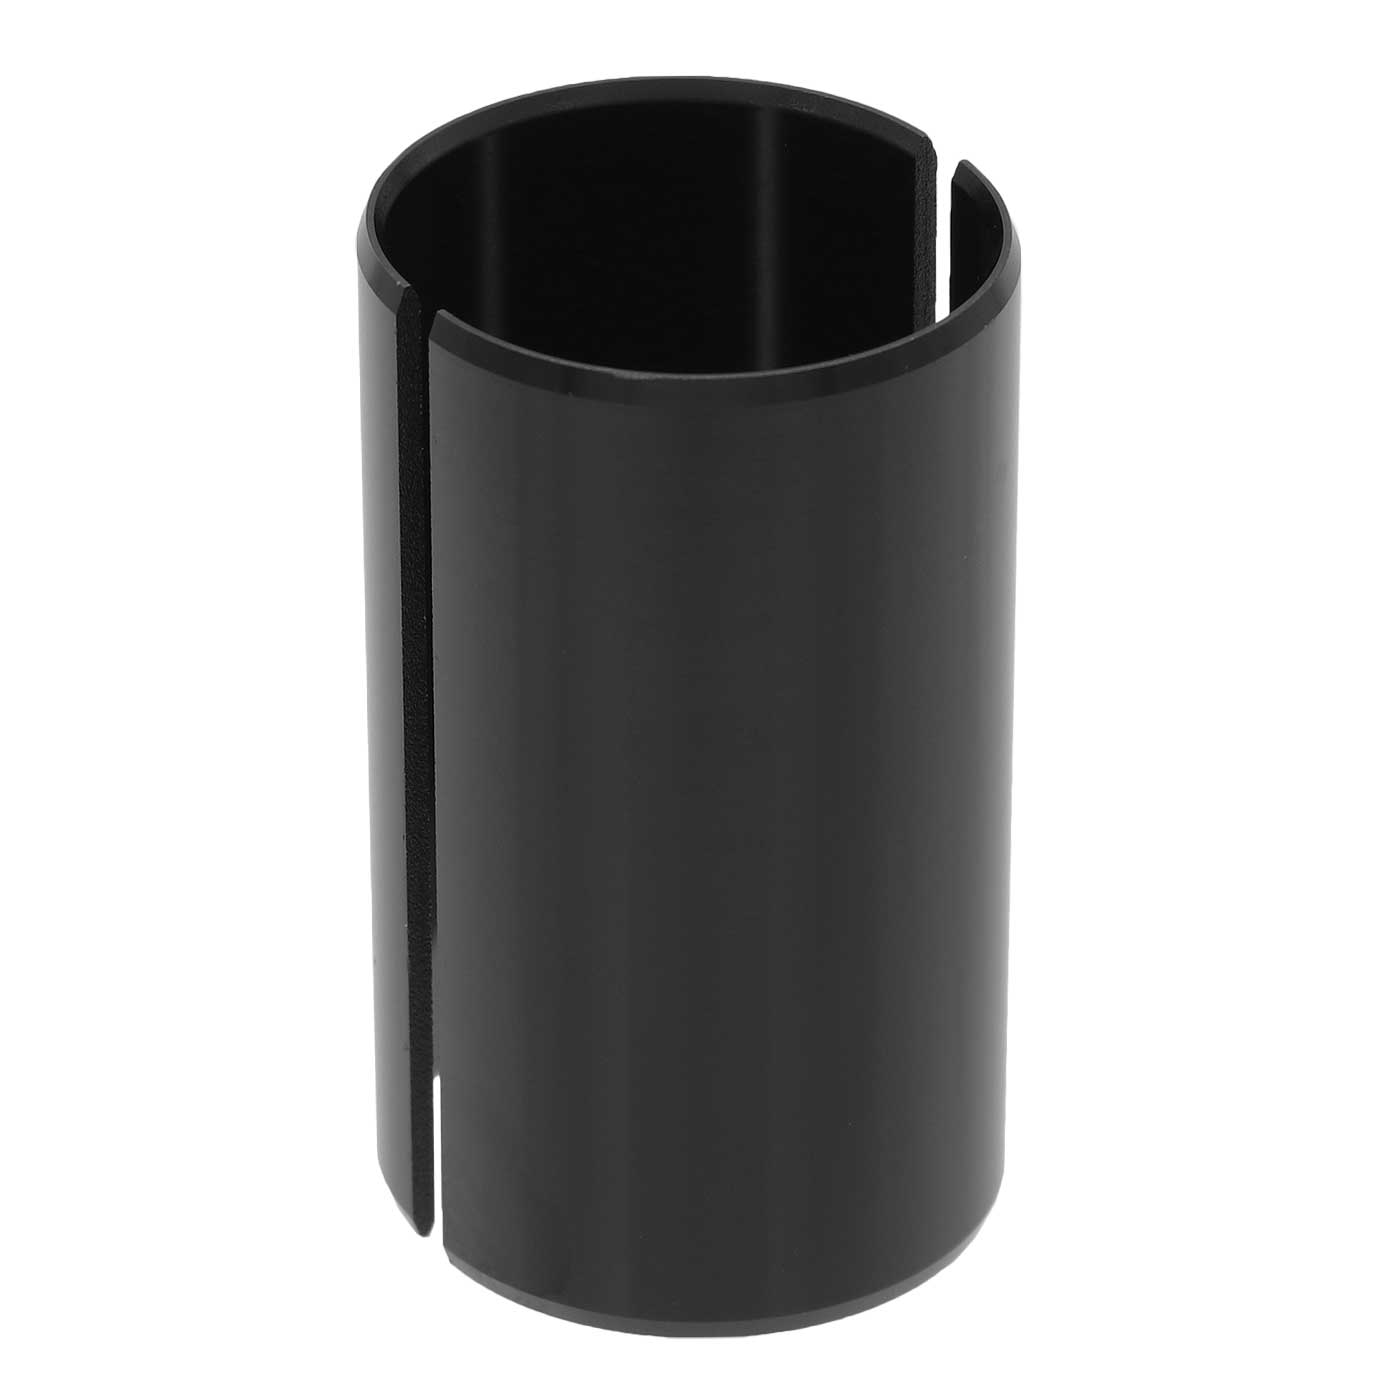 Productfoto van Intend Blackline Extension Handlebar Sleeve - Reducer Adapter | 35mm Stem to 31.8mm Bar